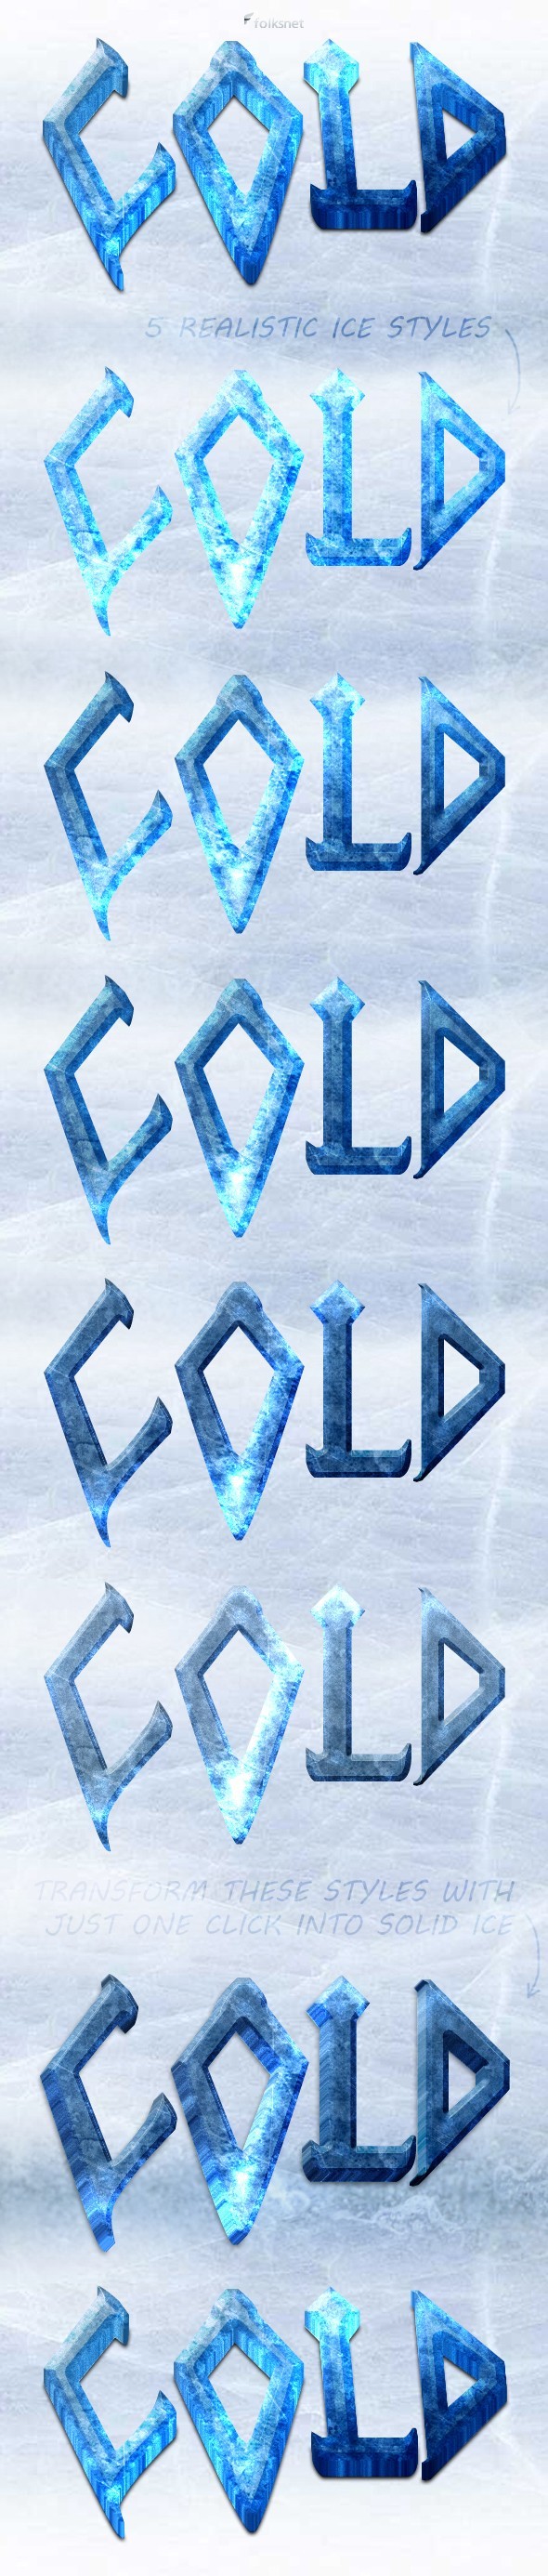 3D Ice Styles